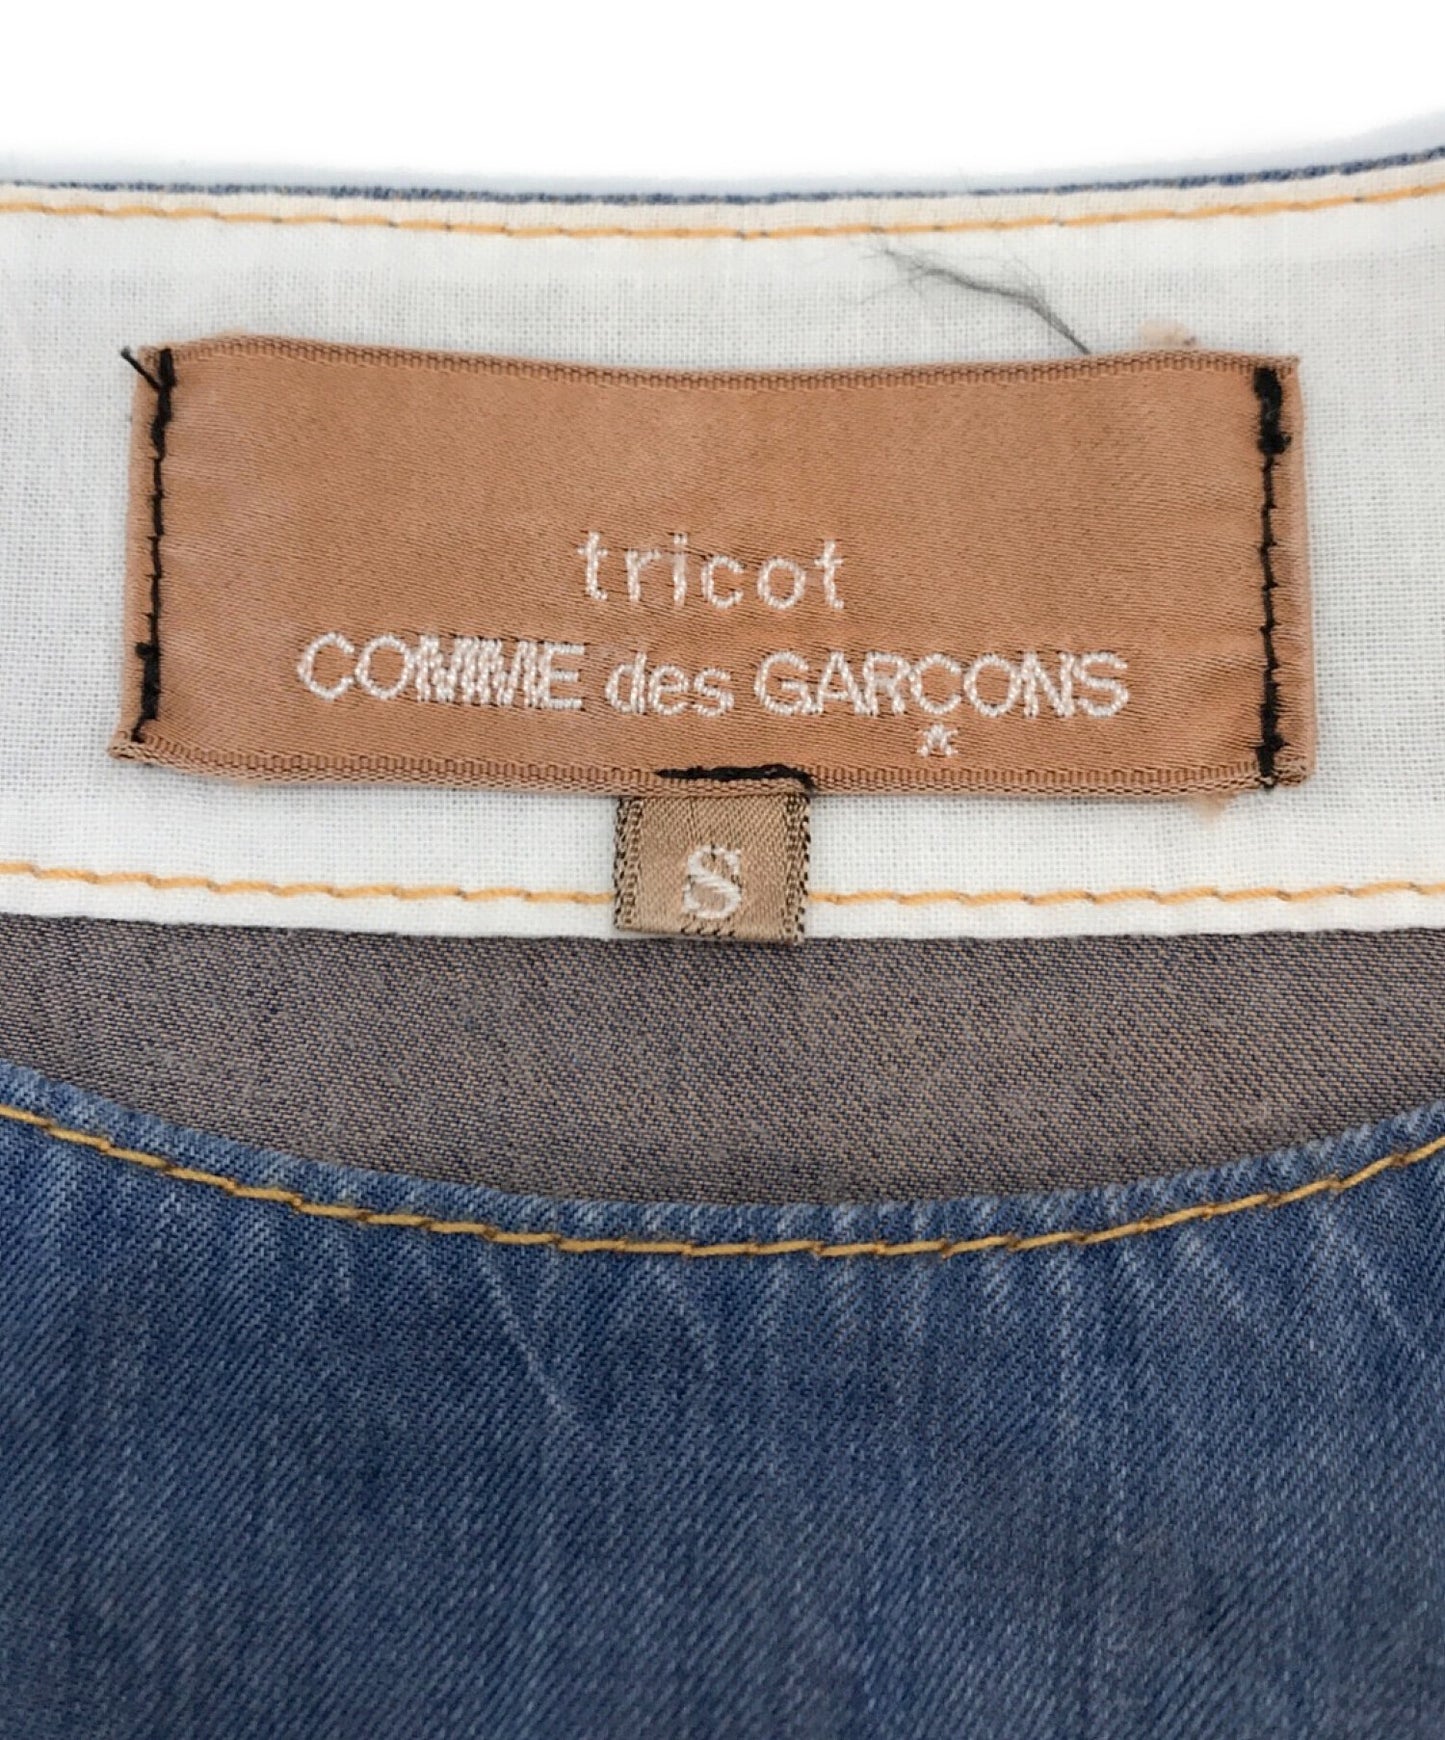 Tricot Comme des Garcons Dungaree Pocket Design 3/4长袖顶TA-B012